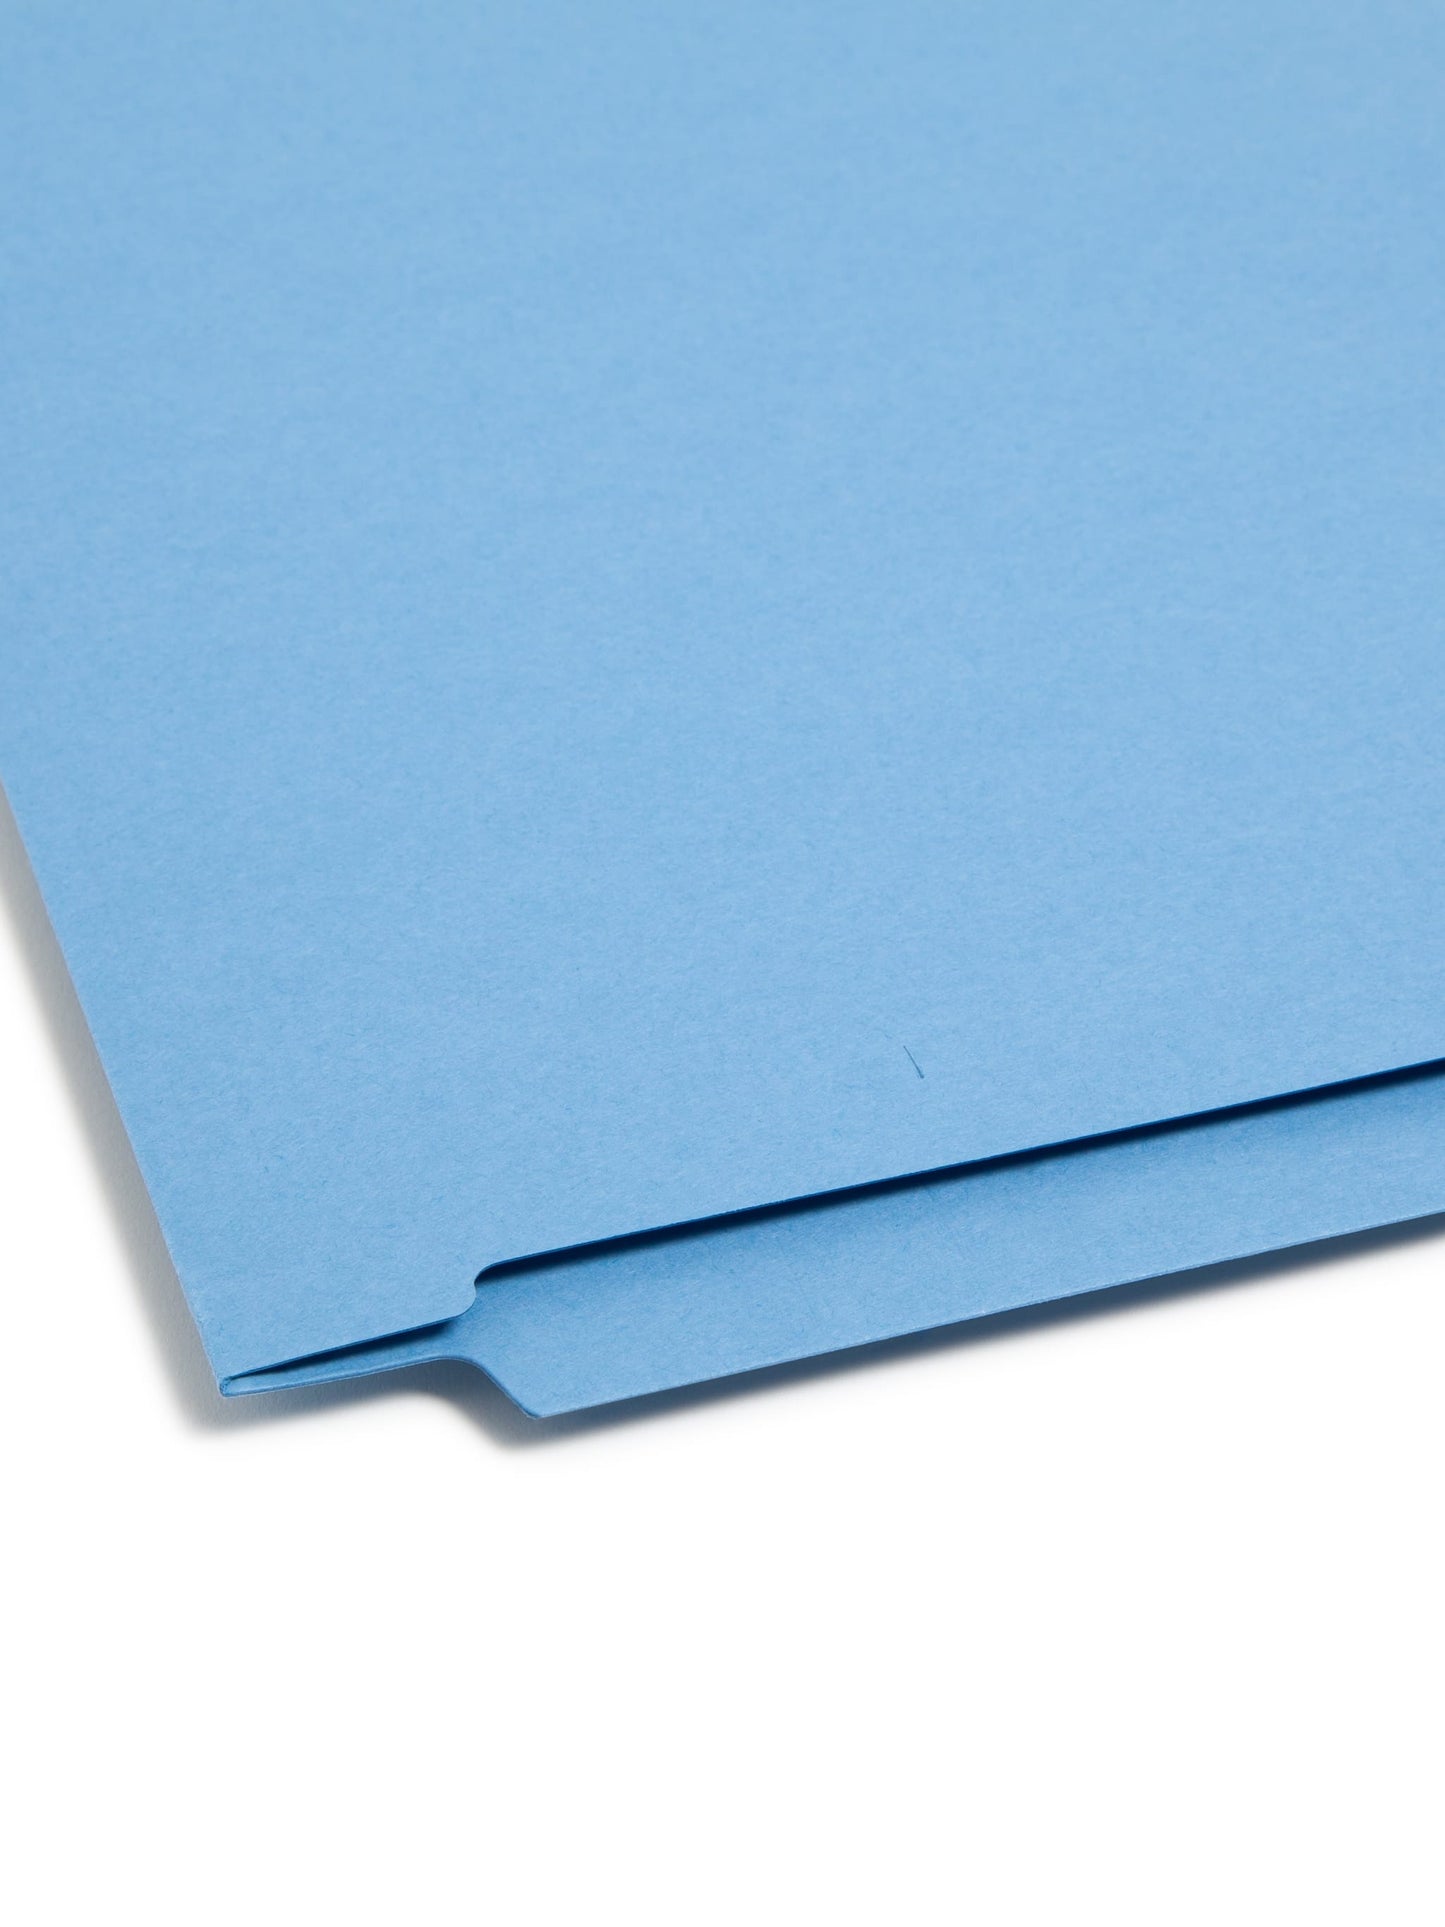 Shelf-Master® Reinforced End Tab Fastener File Folders, Straight-Cut Tab, Blue Color, Letter Size, Set of 50, 086486250405